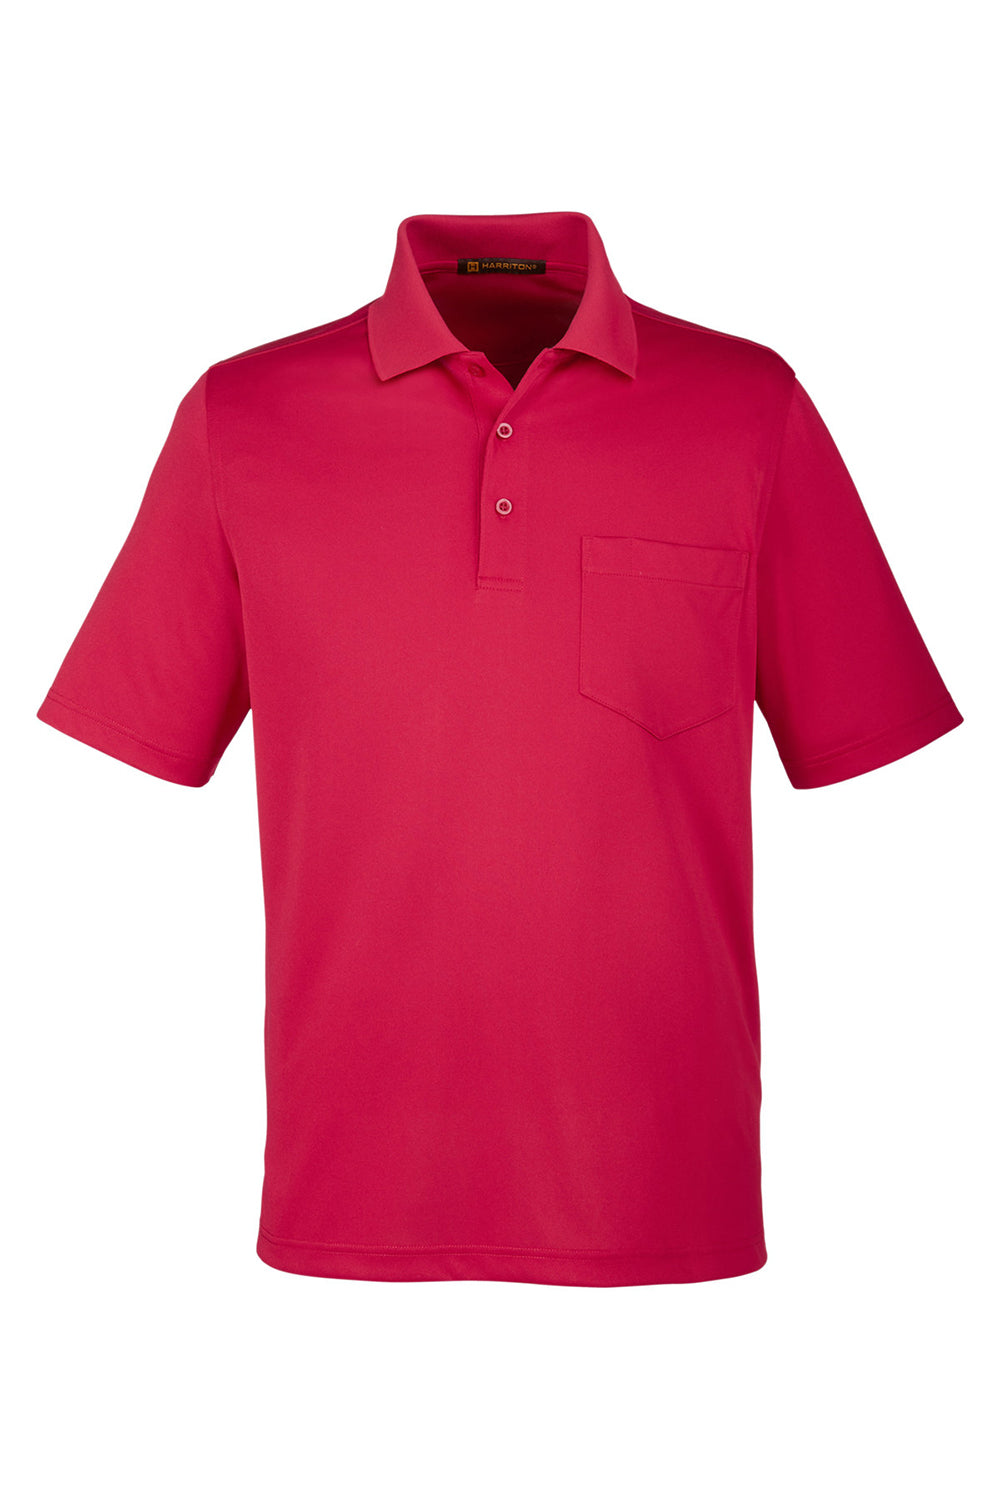 Harriton M348P Mens Advantage Performance Moisture Wicking Short Sleeve Polo Shirt w/ Pocket Red Flat Front